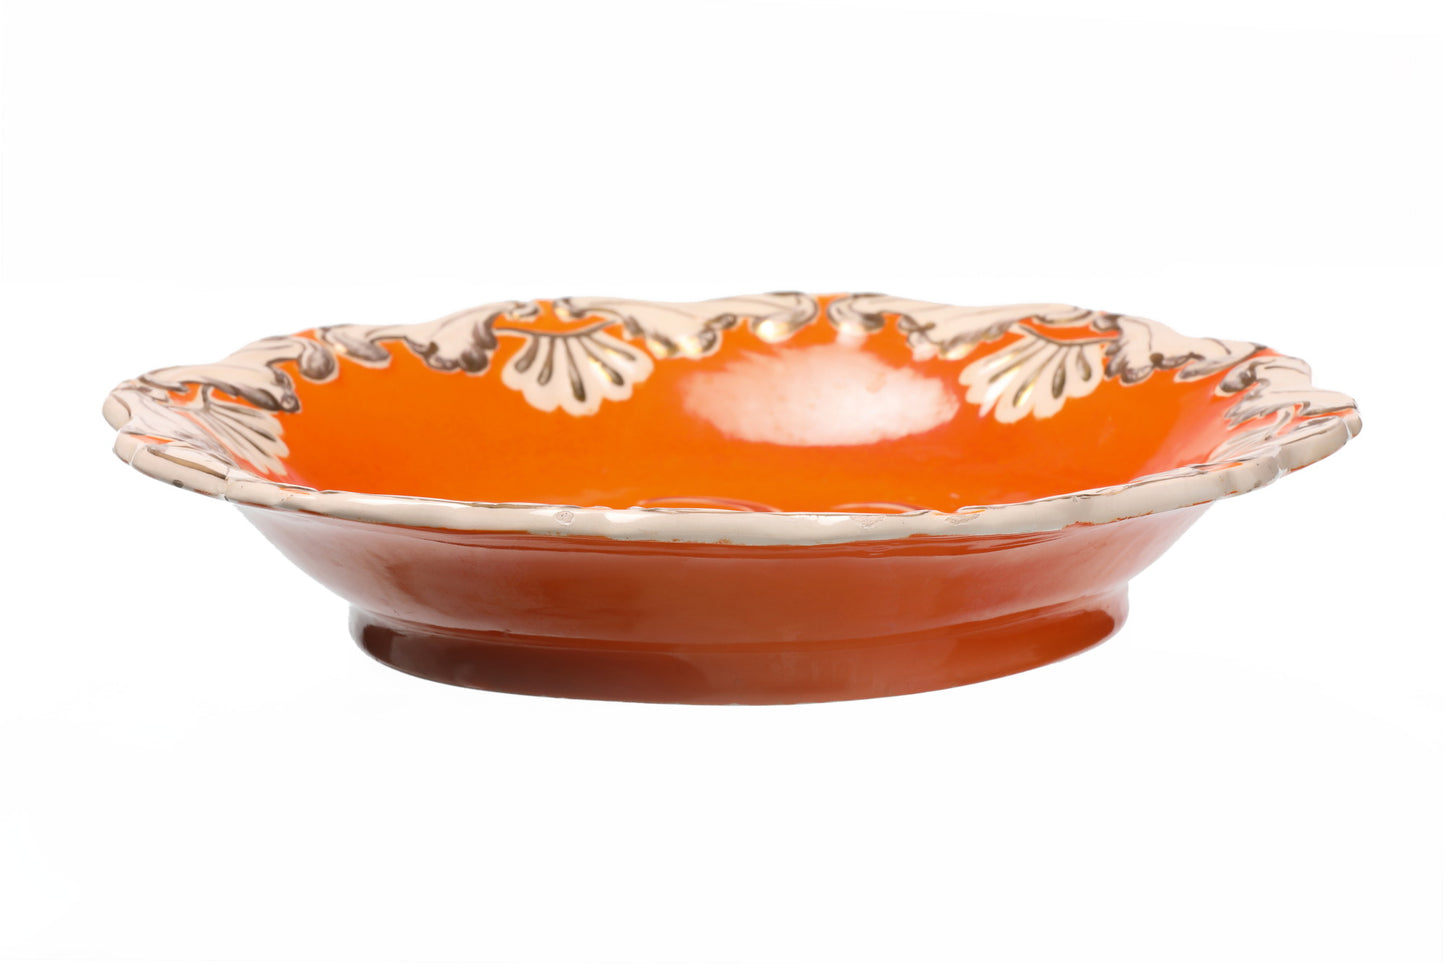 Orange ceramic centerpiece from the 50s